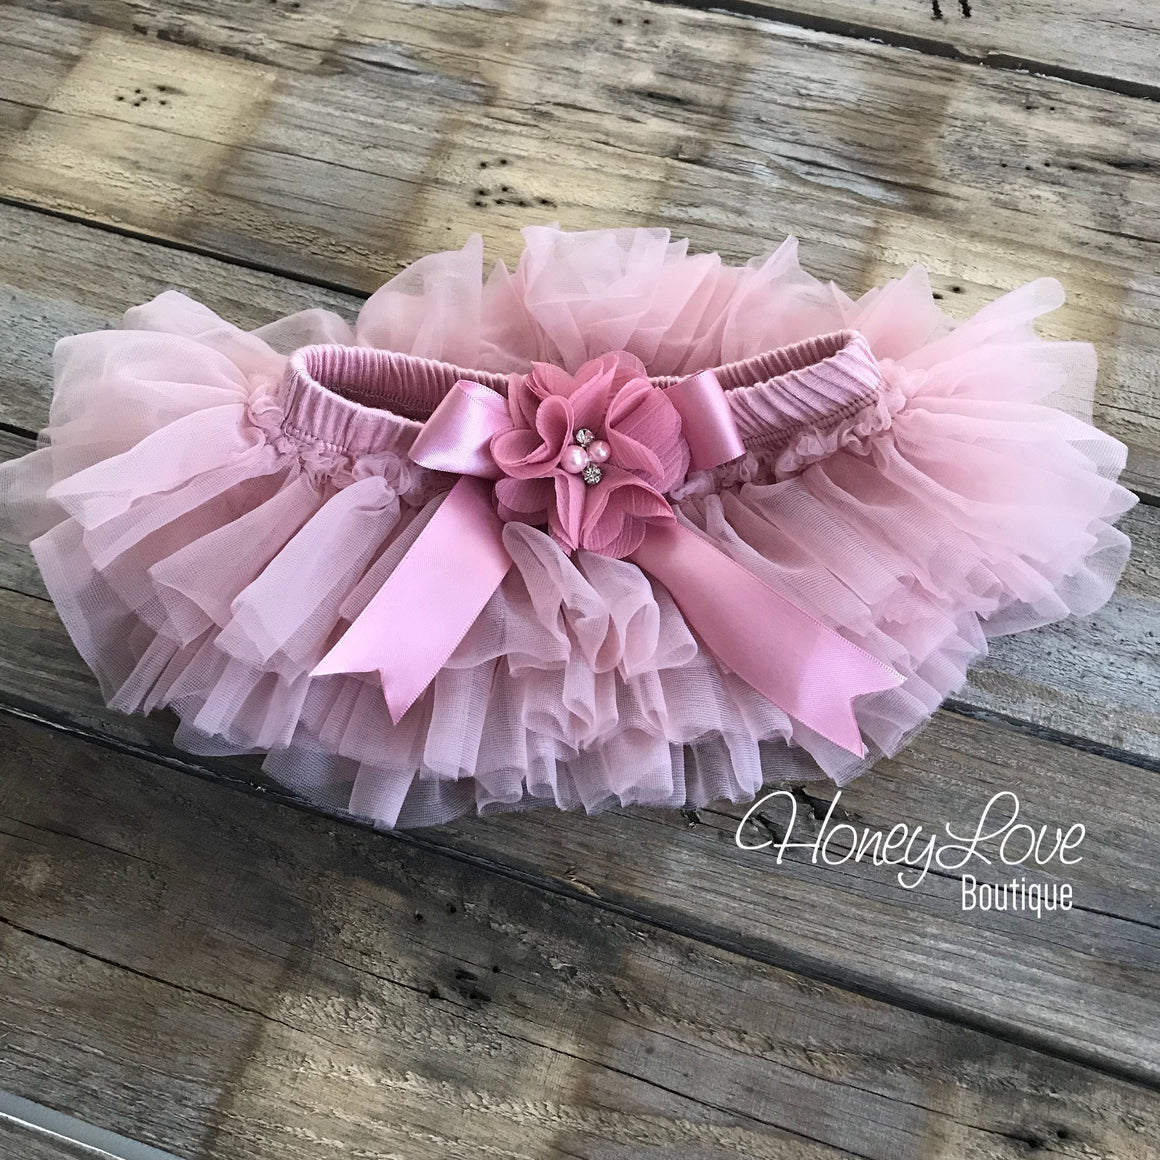 Vintage Pink embellished tutu skirt bloomers and matching headband - HoneyLoveBoutique